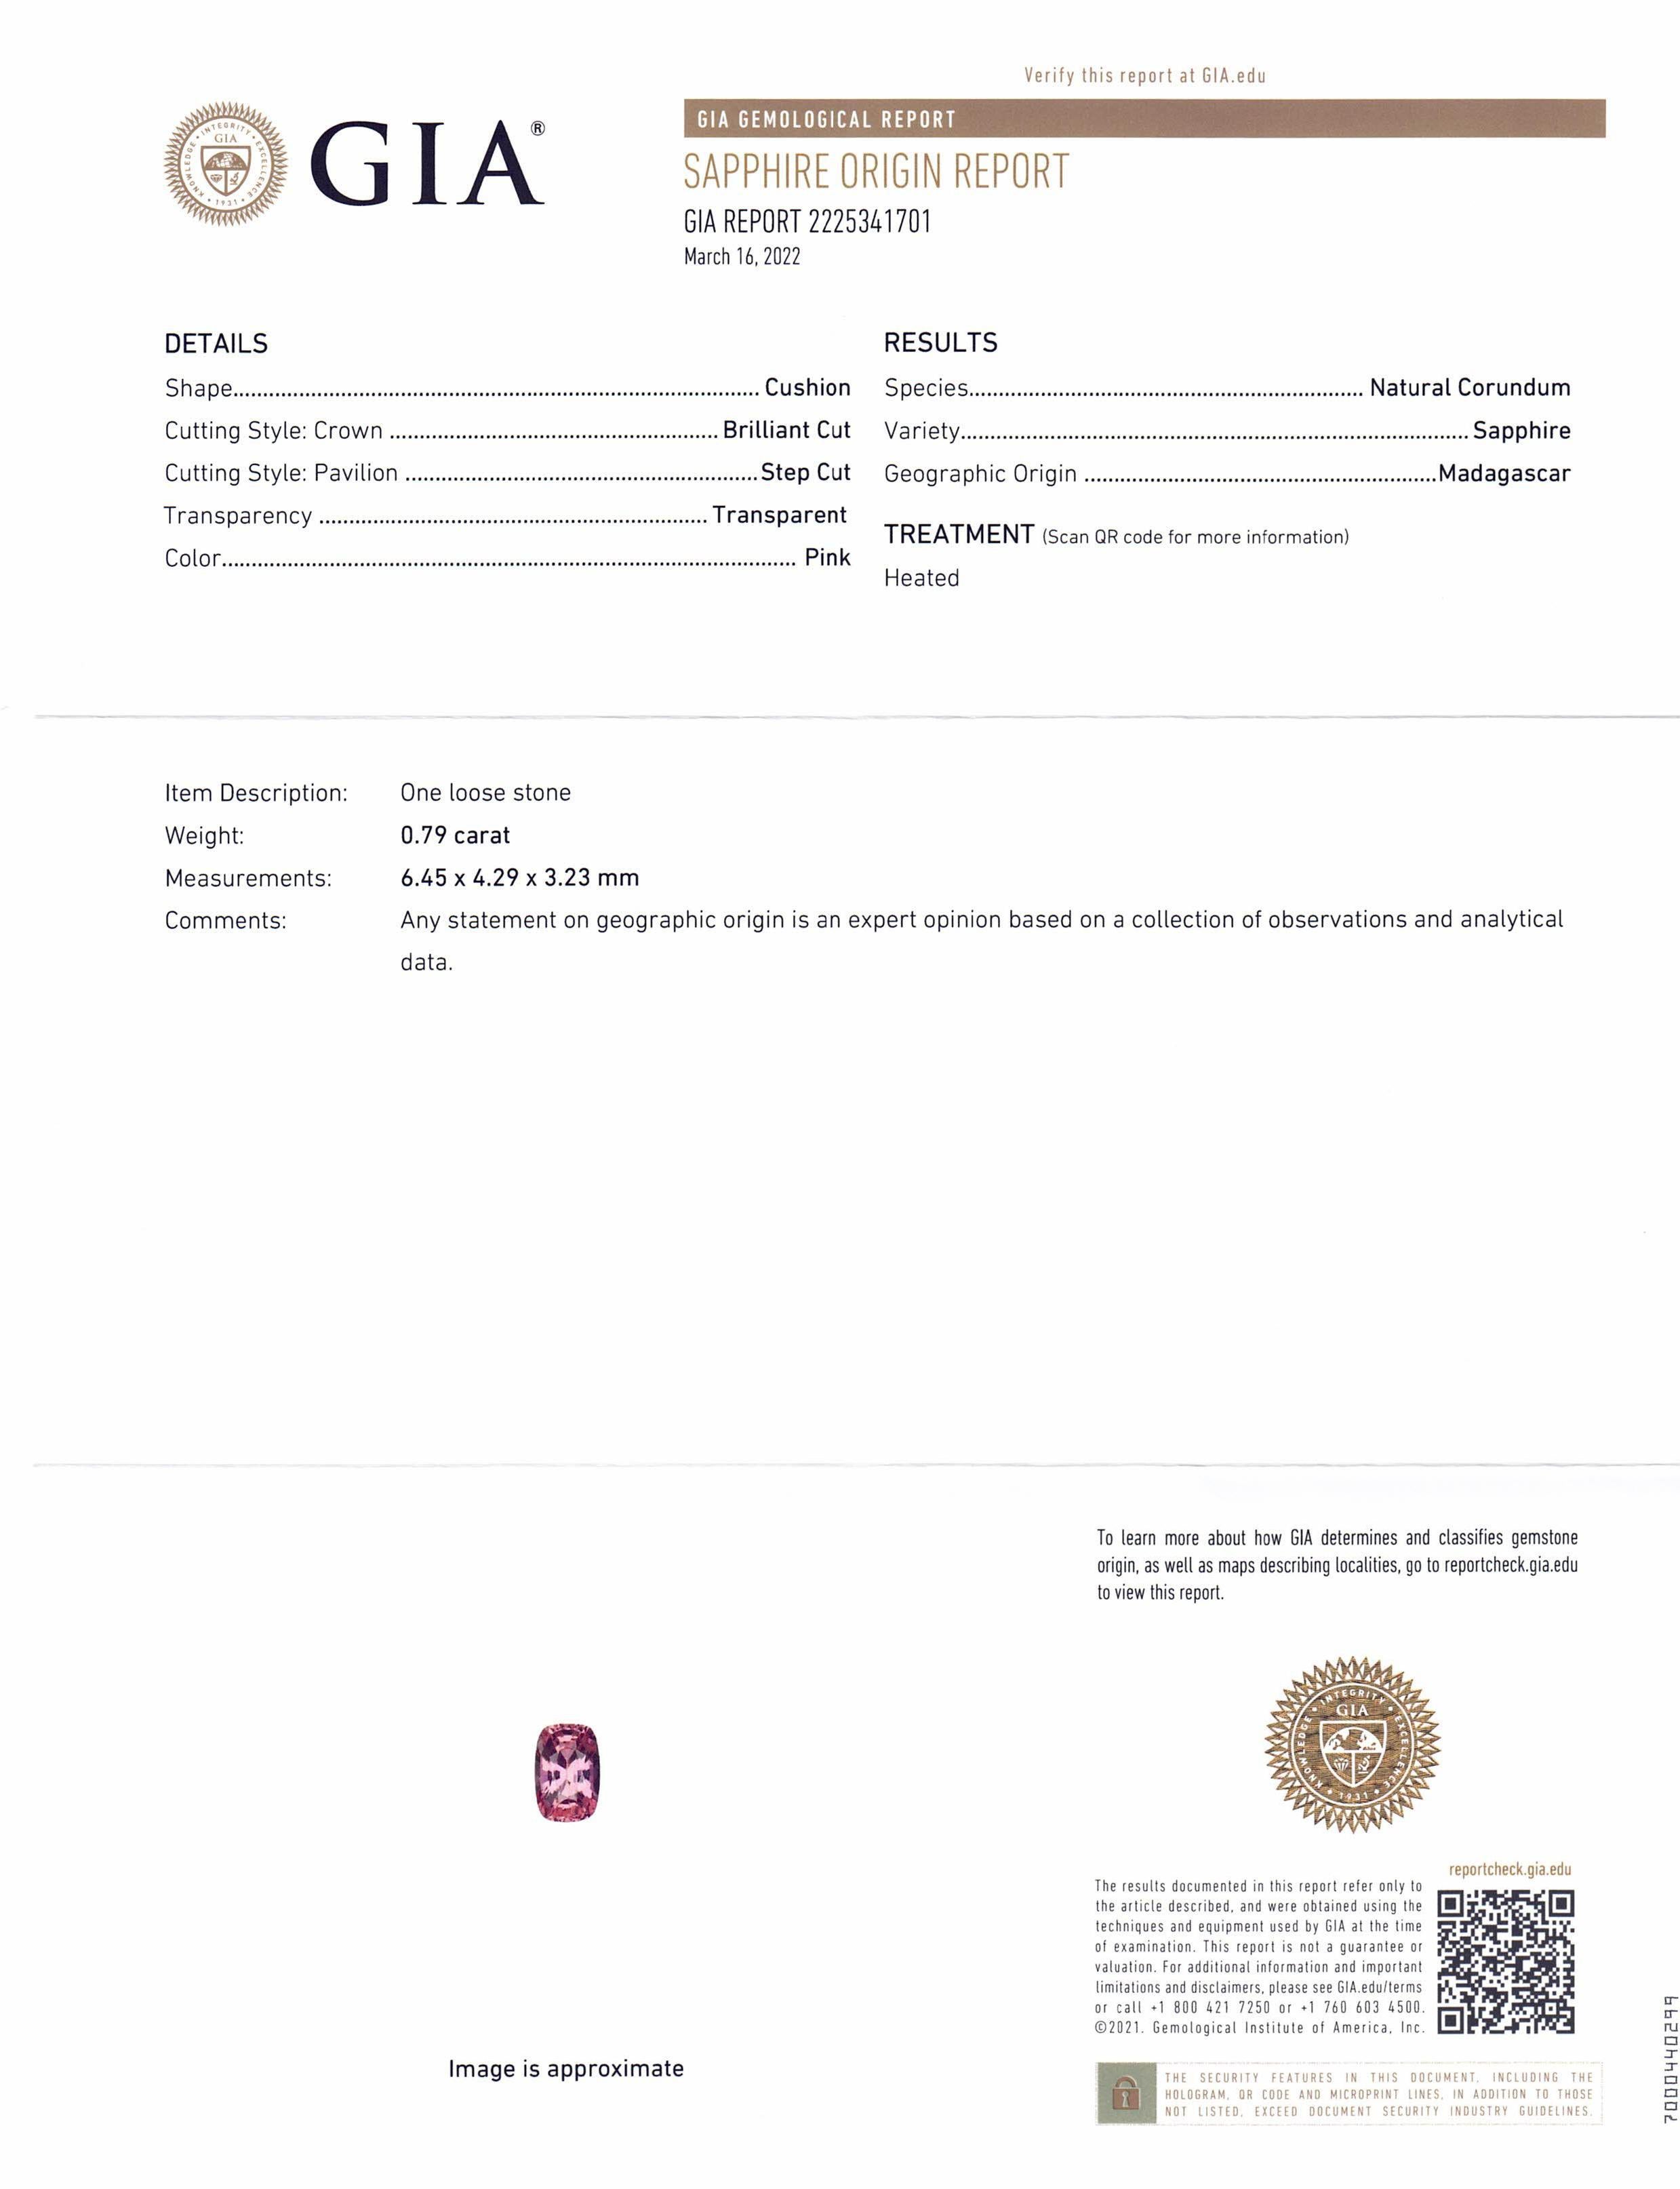 Saphir rose coussin de 0,79 carat certifié GIA de Madagascar Unisexe en vente